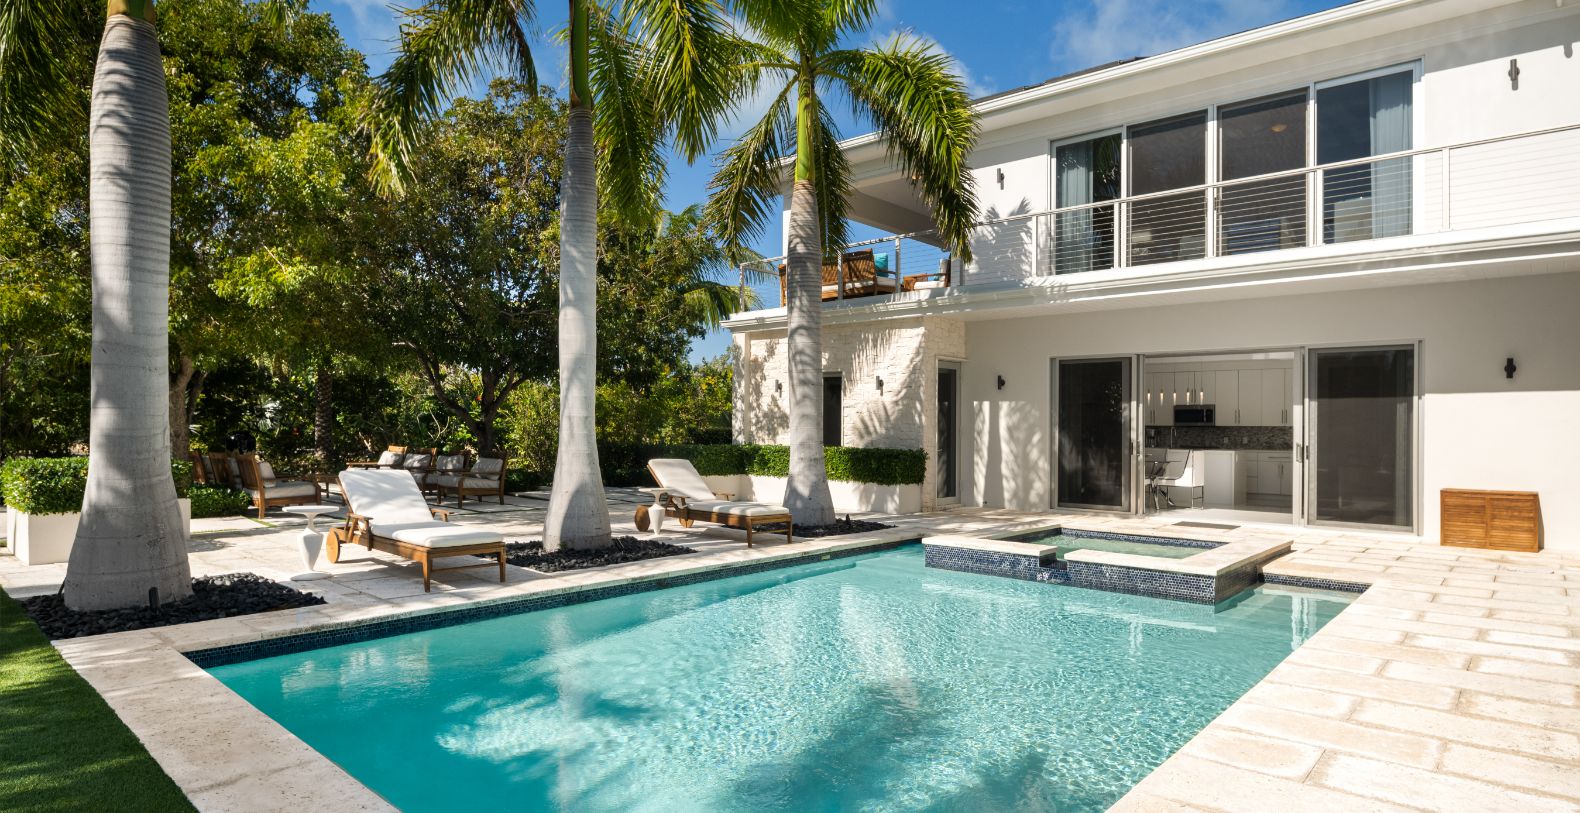 Villa Viatu Turks & Caicos Vacation Rental